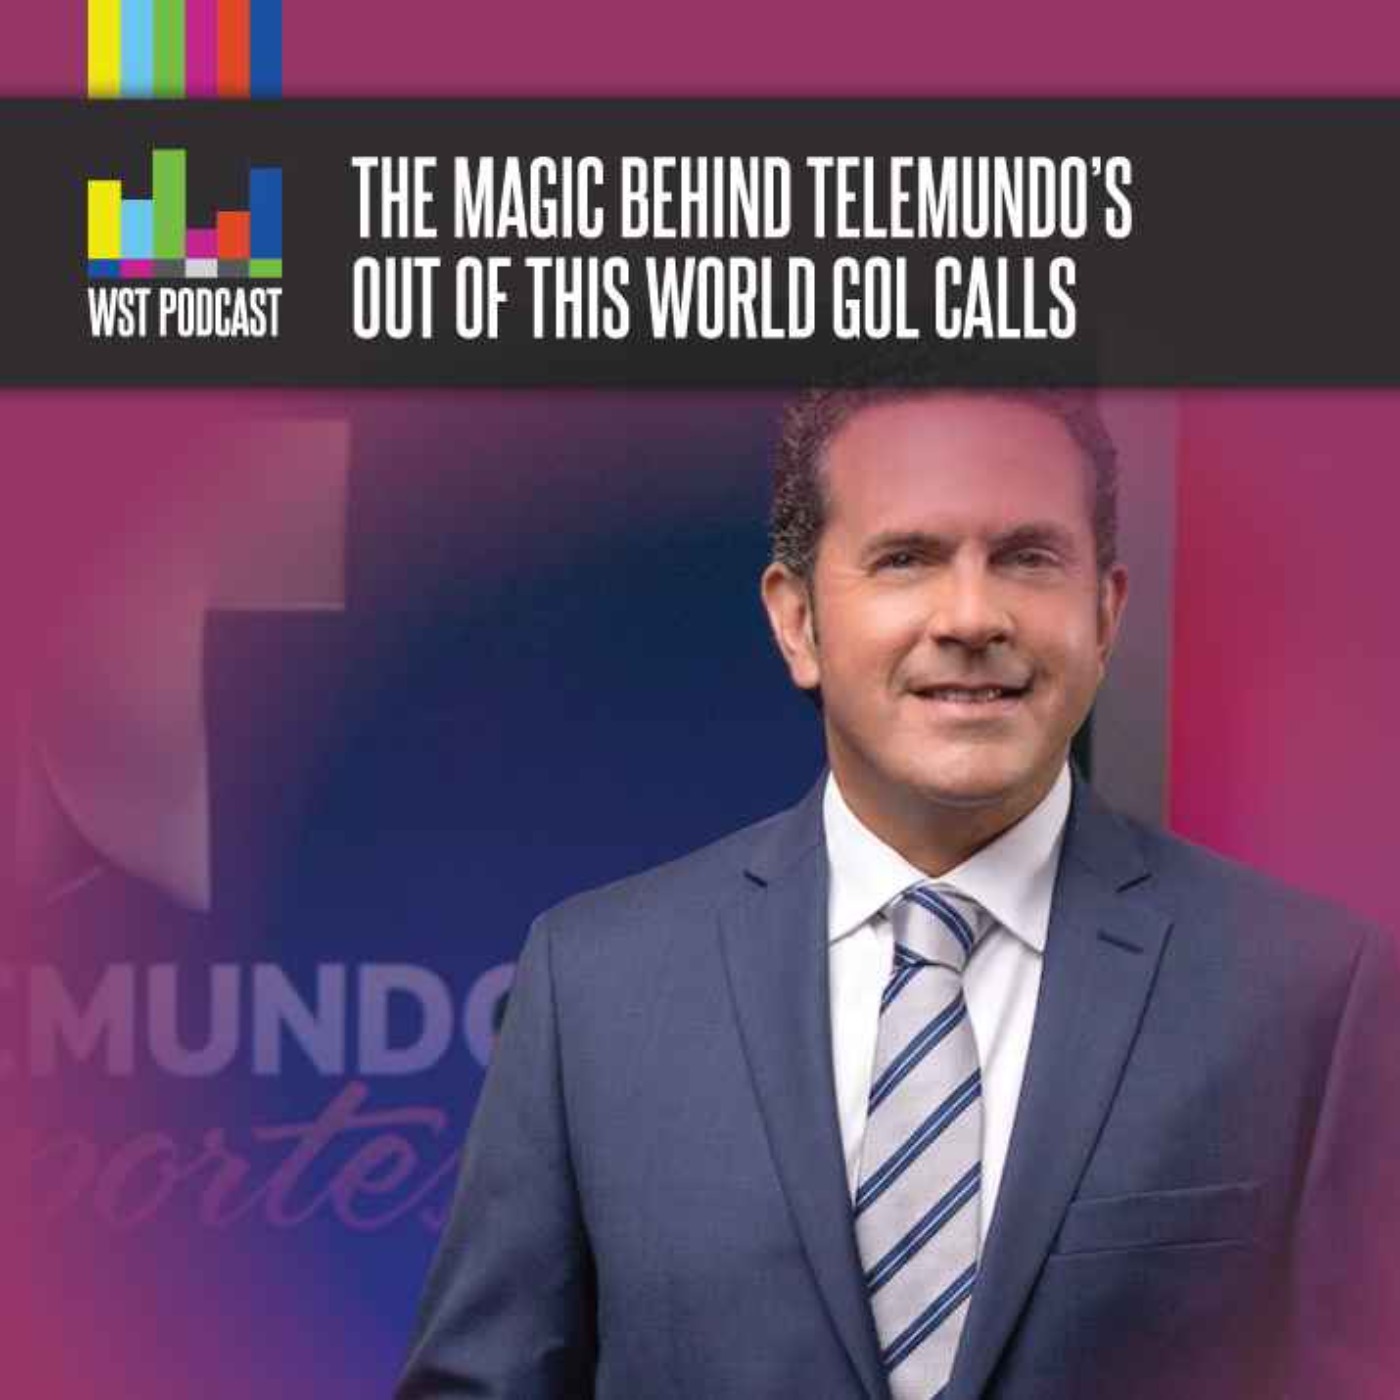 Magic behind Telemundo's out of this world gol calls